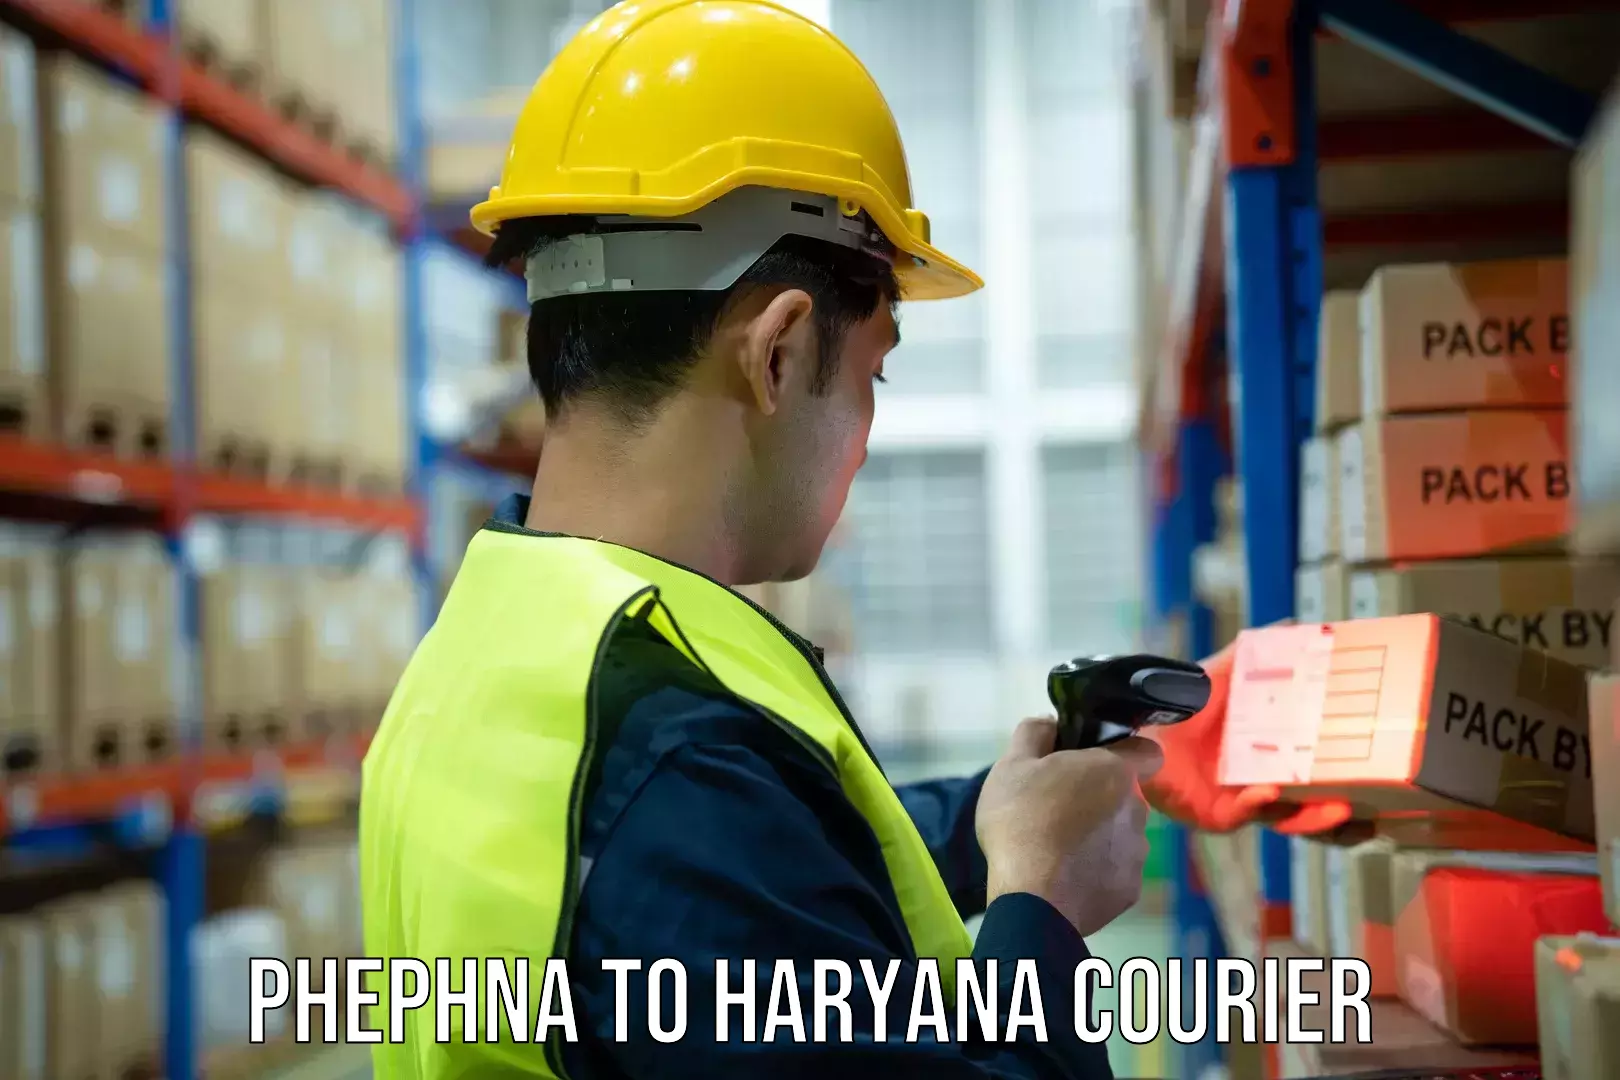 Advanced shipping technology Phephna to Sirsa